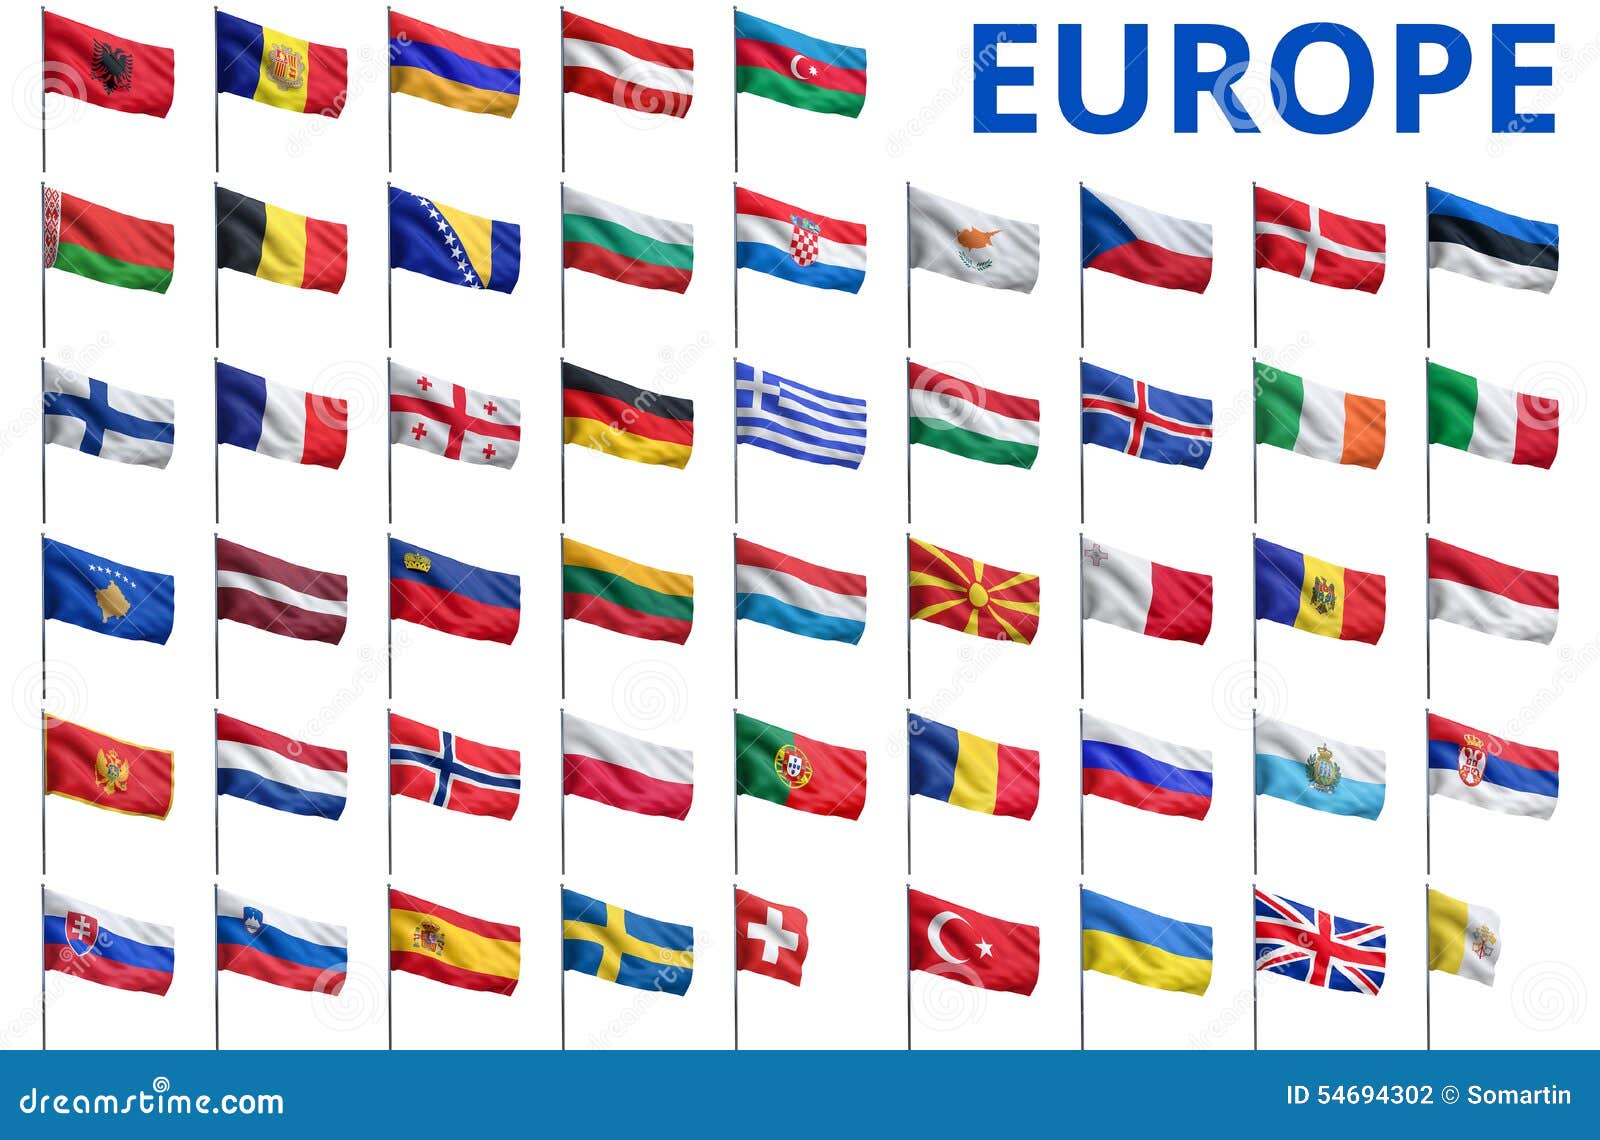 clipart flaggen europa - photo #34